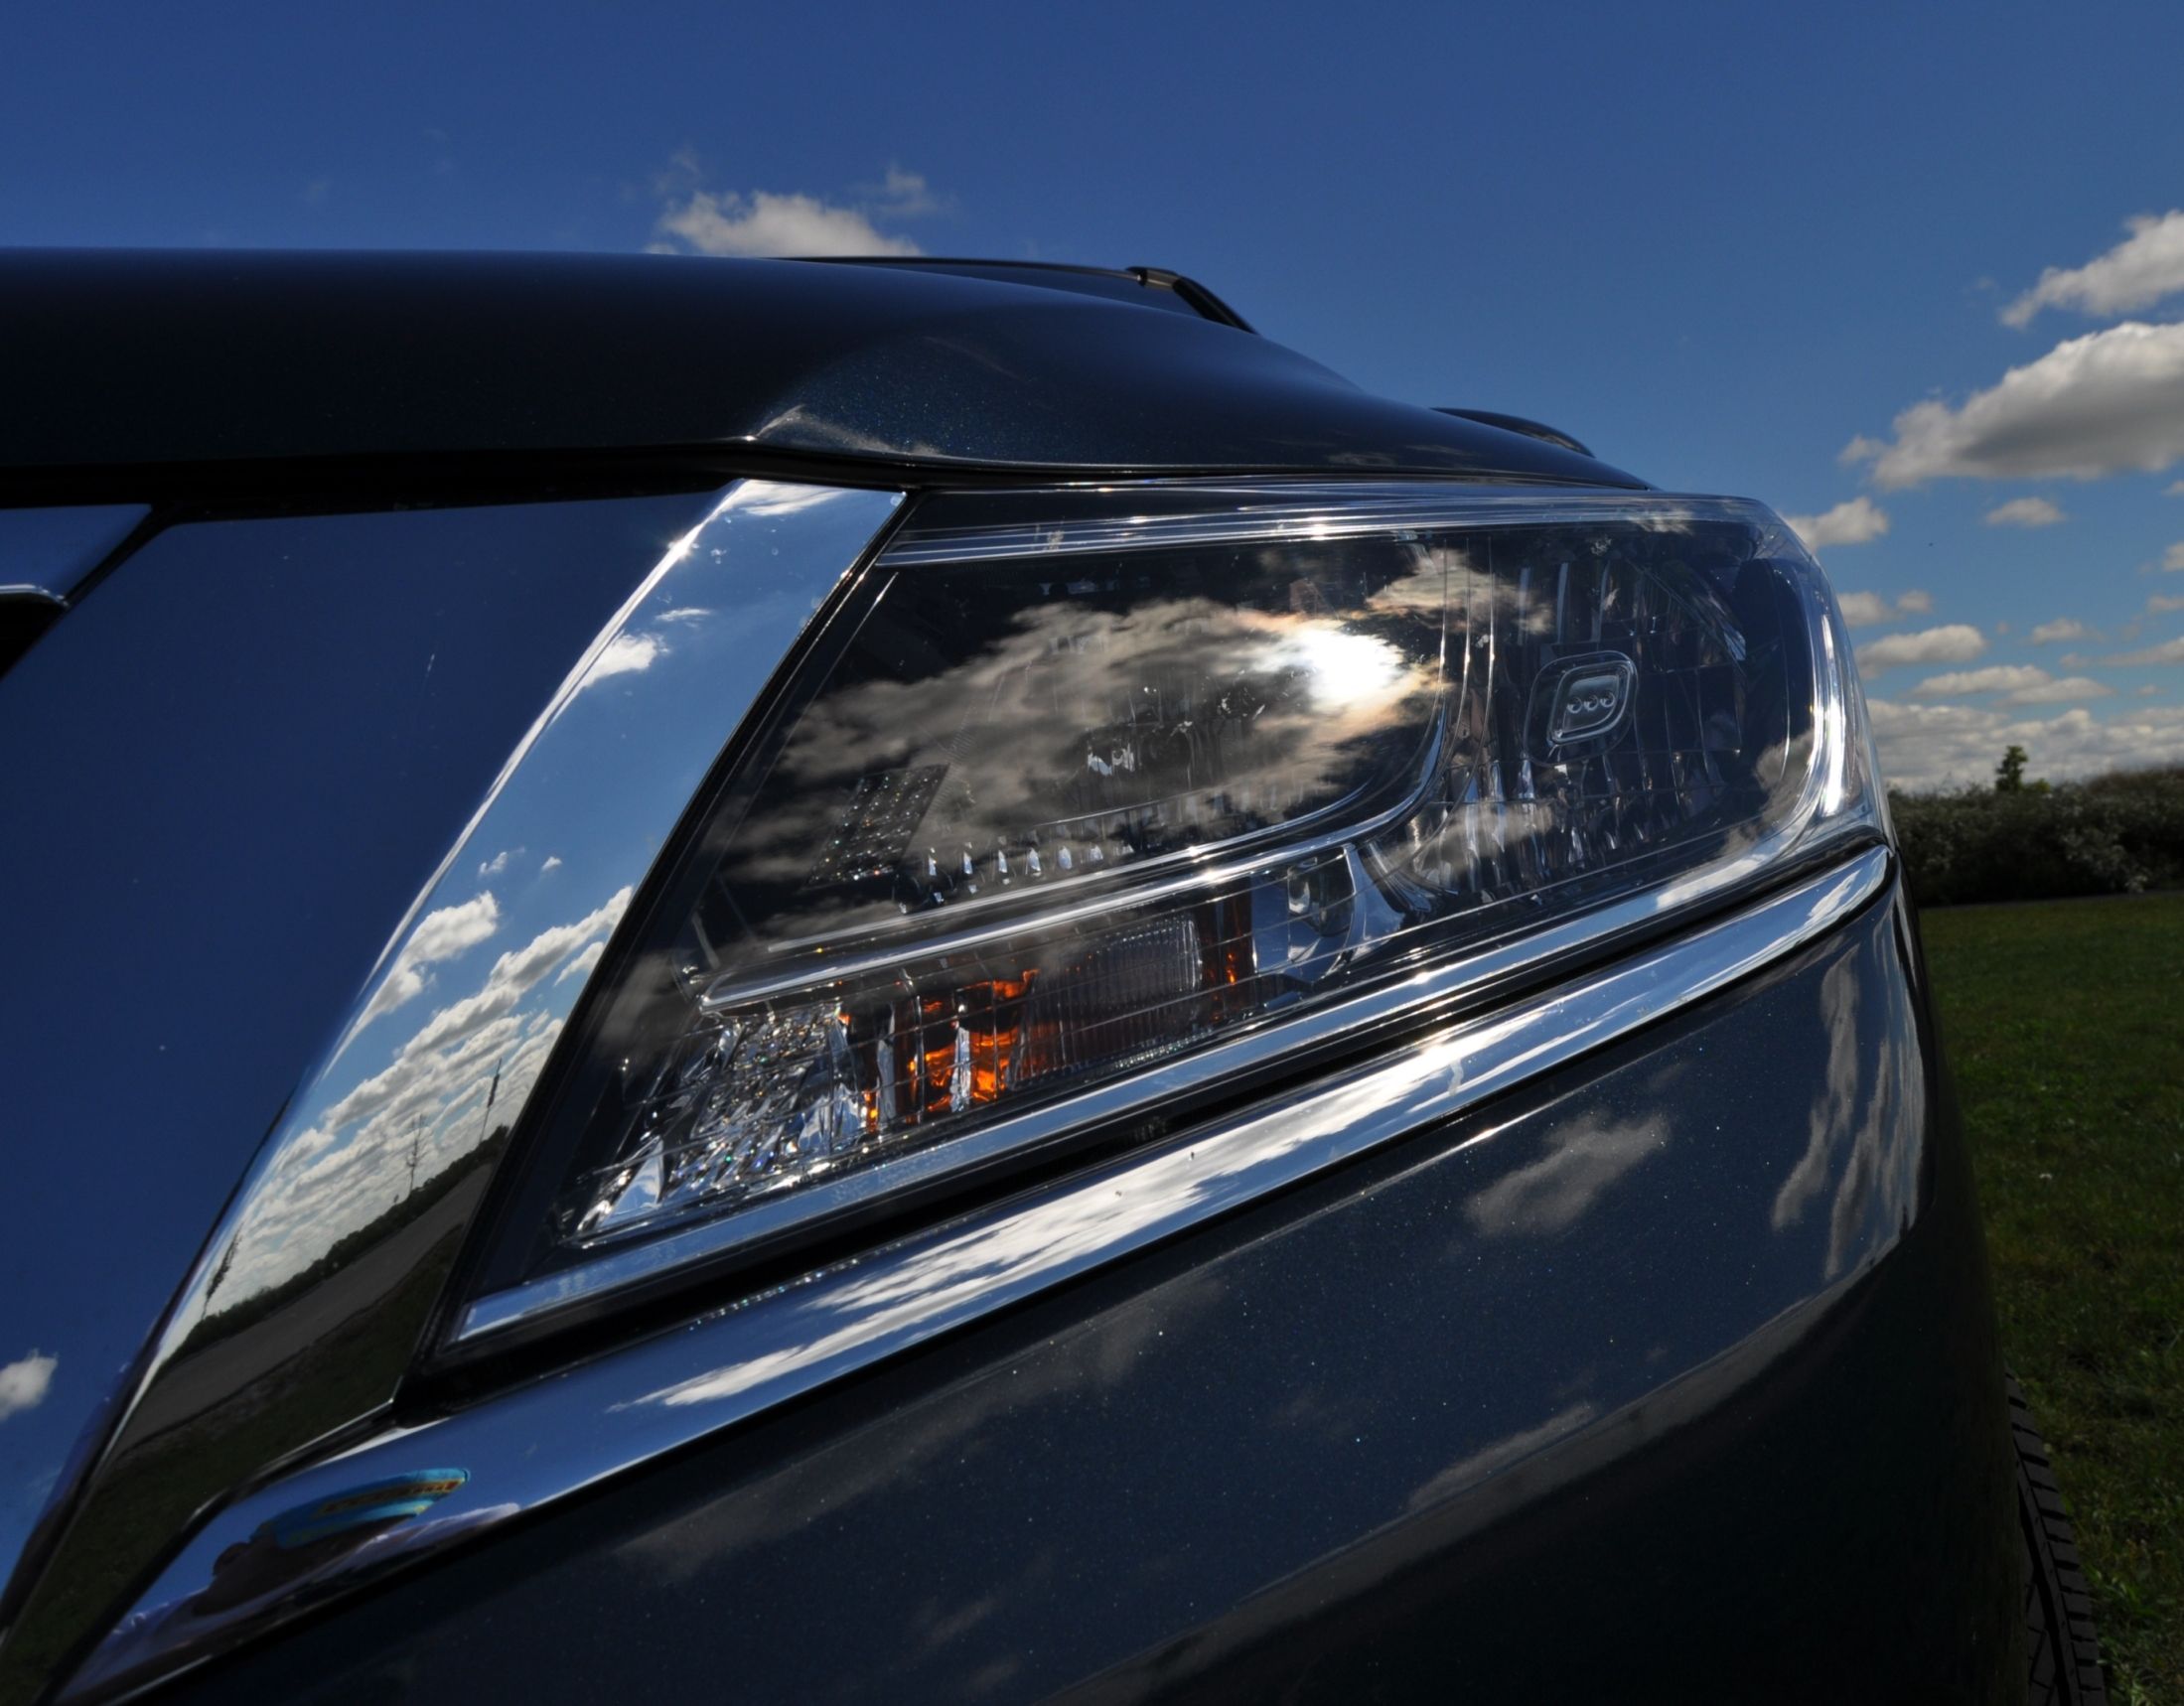 2014 Nissan Pathfinder - Driven